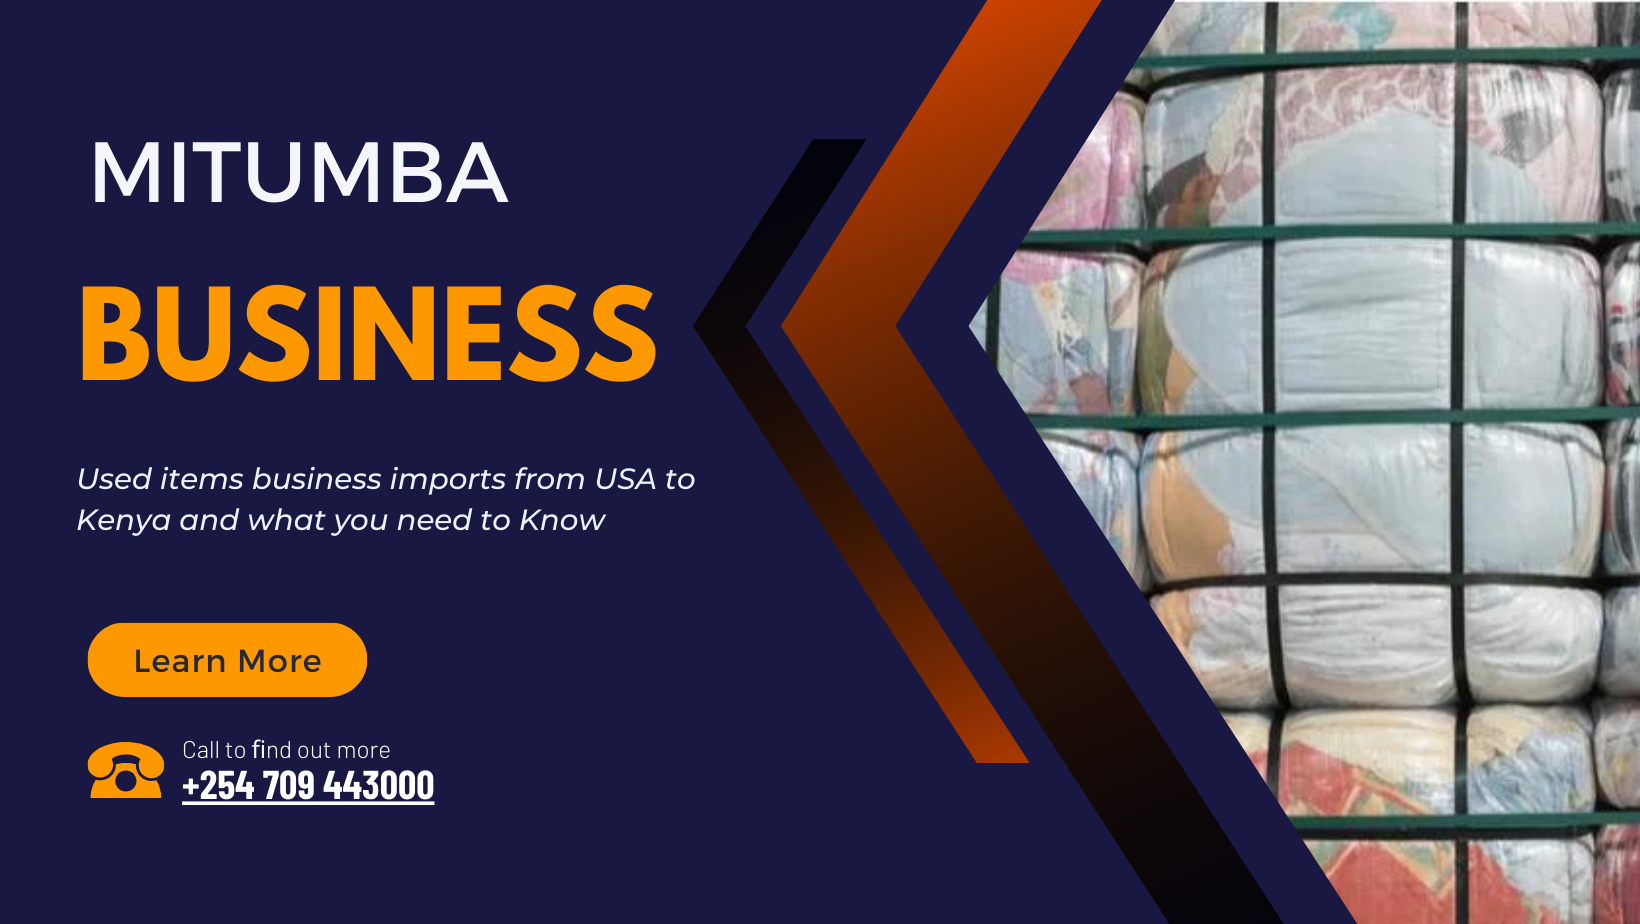 Mitumba business in Kenya